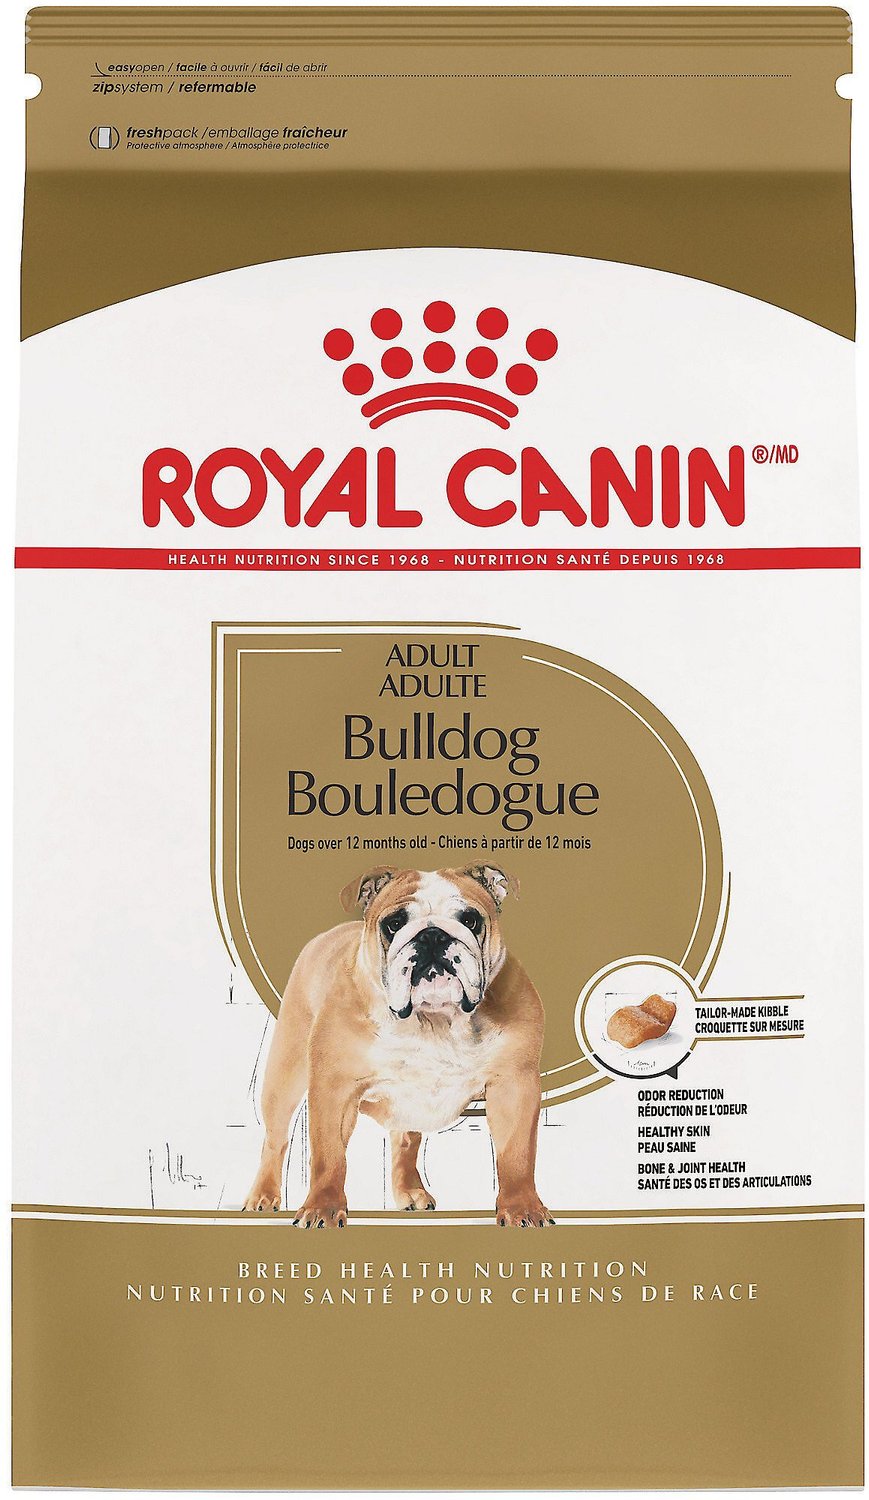 Royal Canin razza salute nutrizione Bulldog